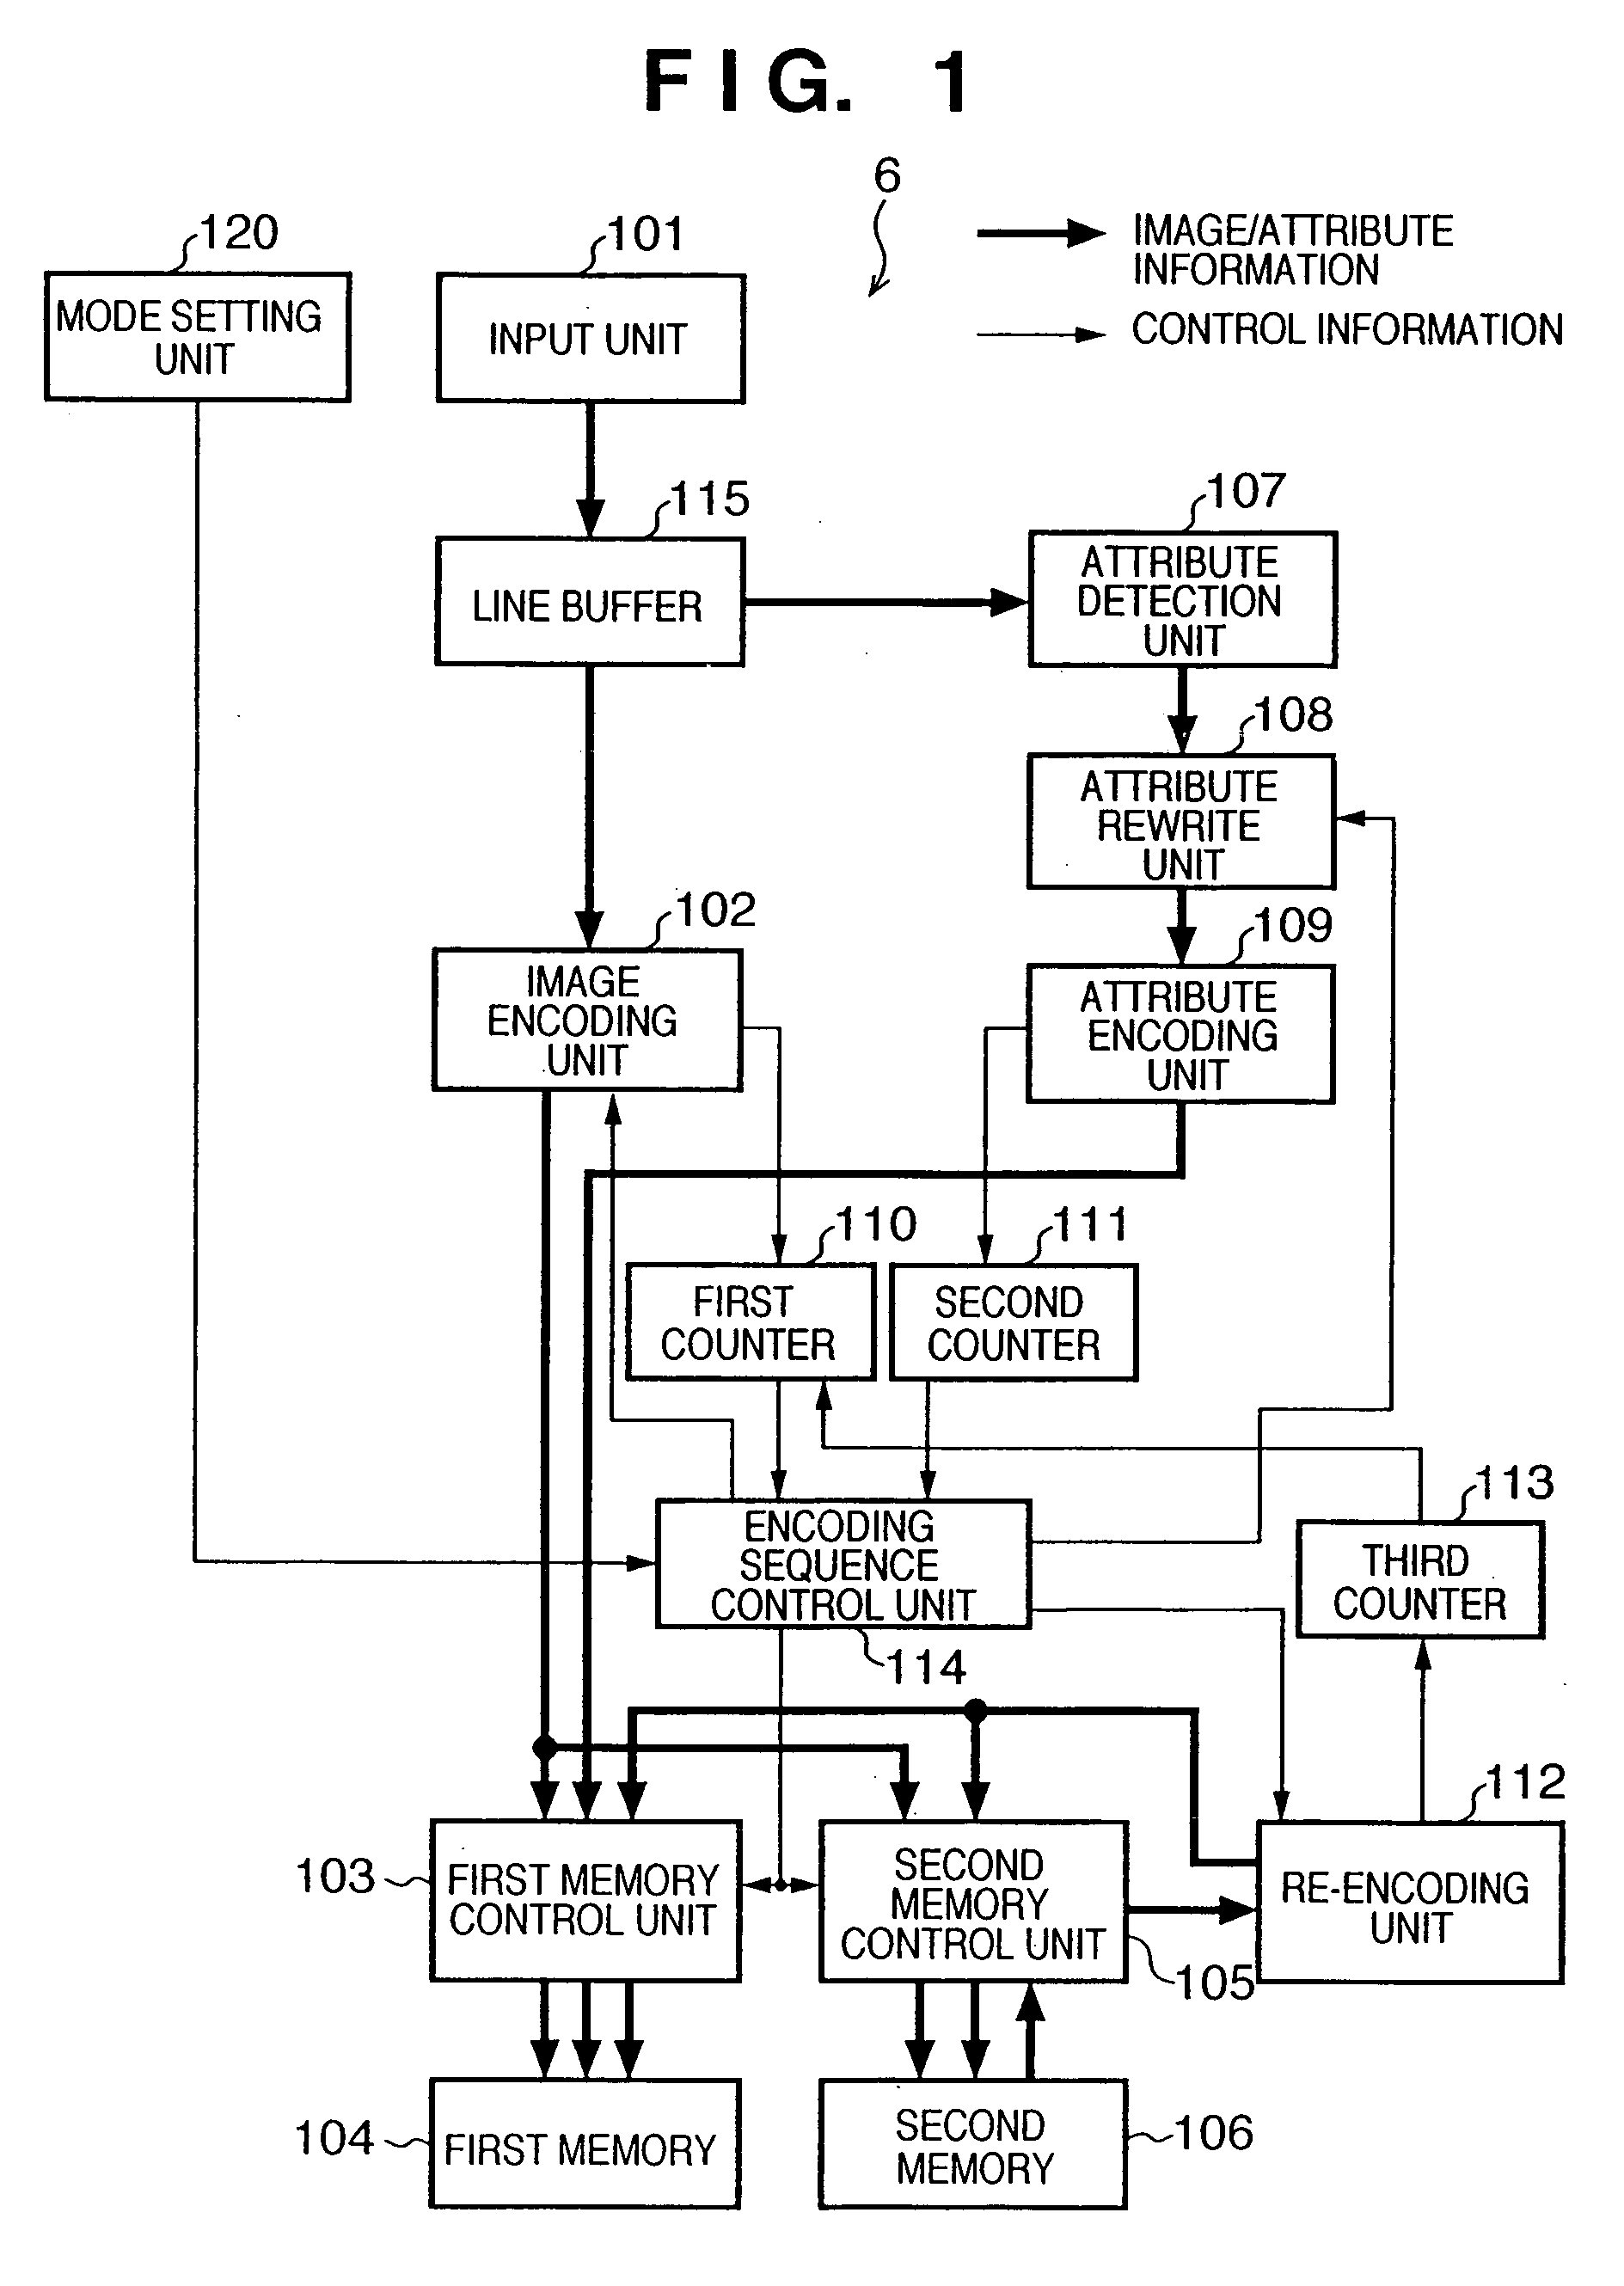 Image encoding apparatus and method, computer program, computer-readable storage medium, and image forming apparatus